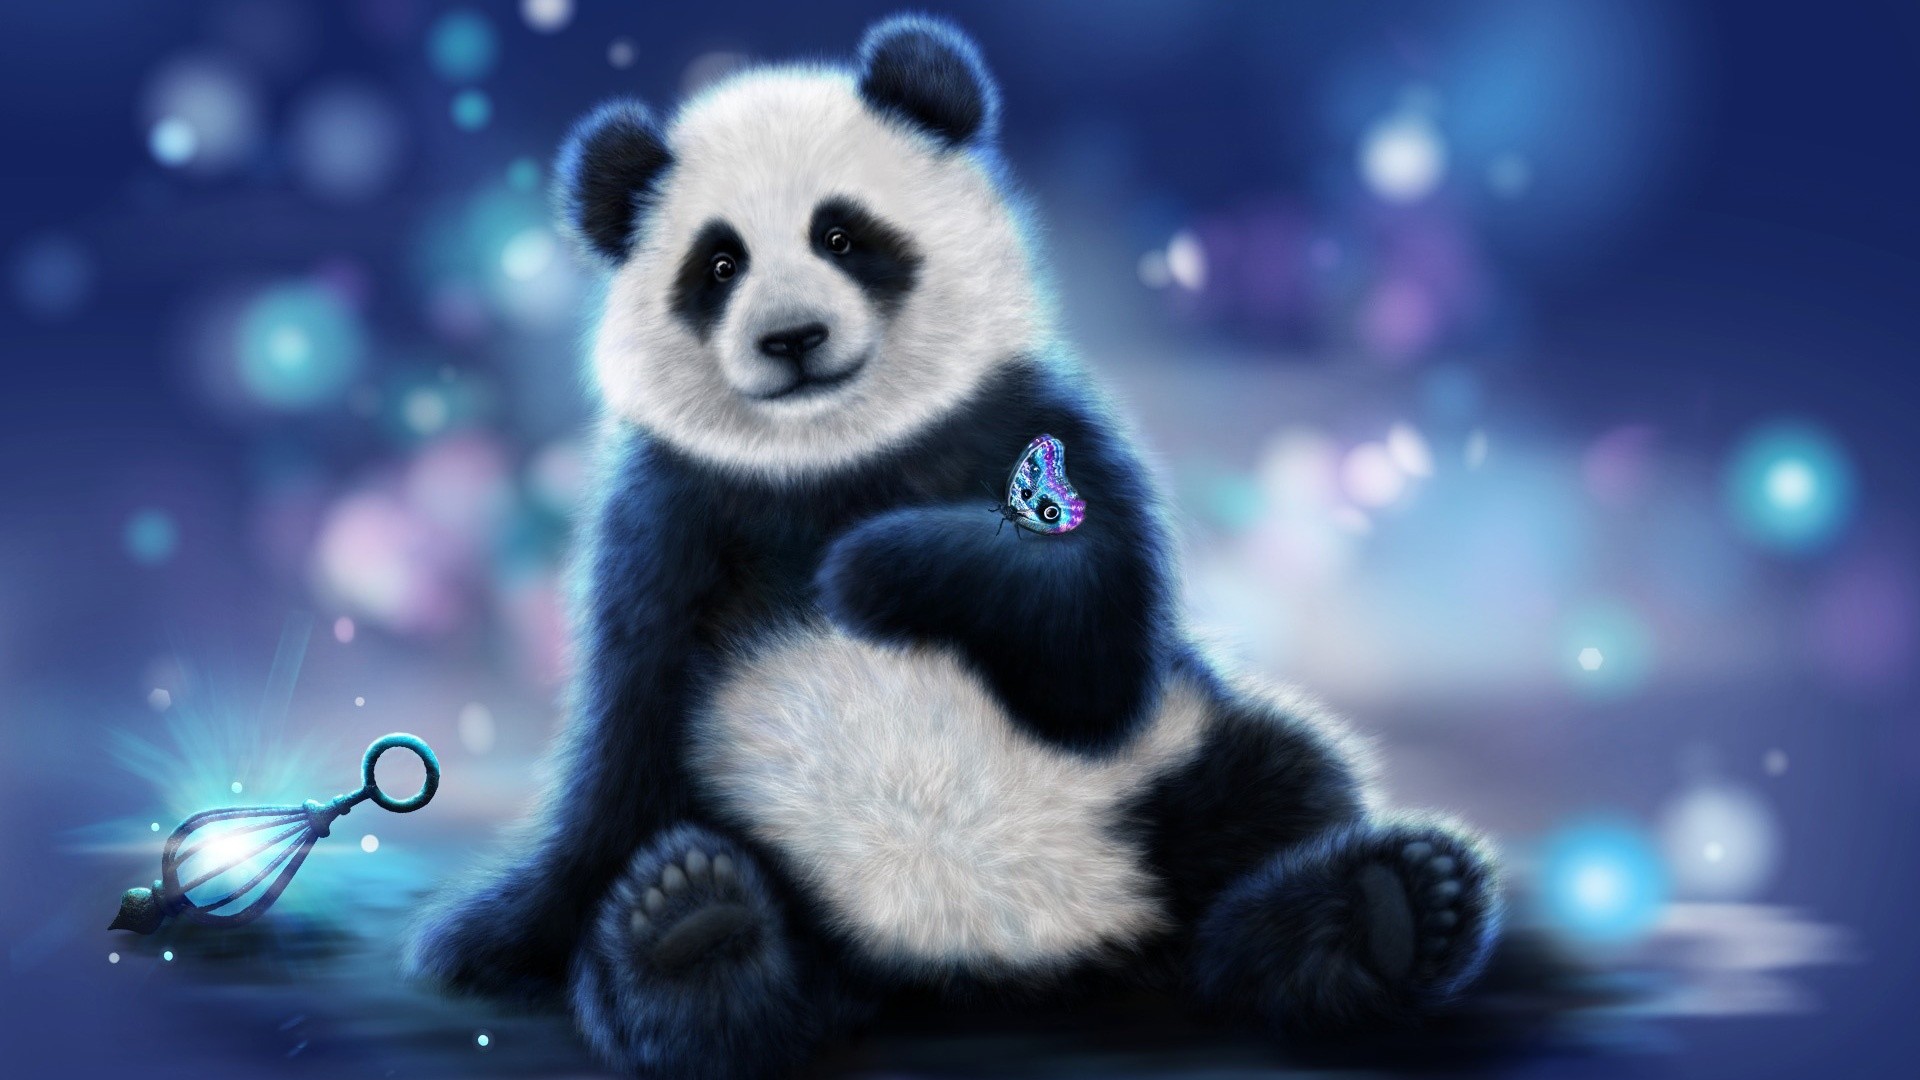 1920x1080 ... free download cute panda wallpapers tumblr pixelstalk net ...